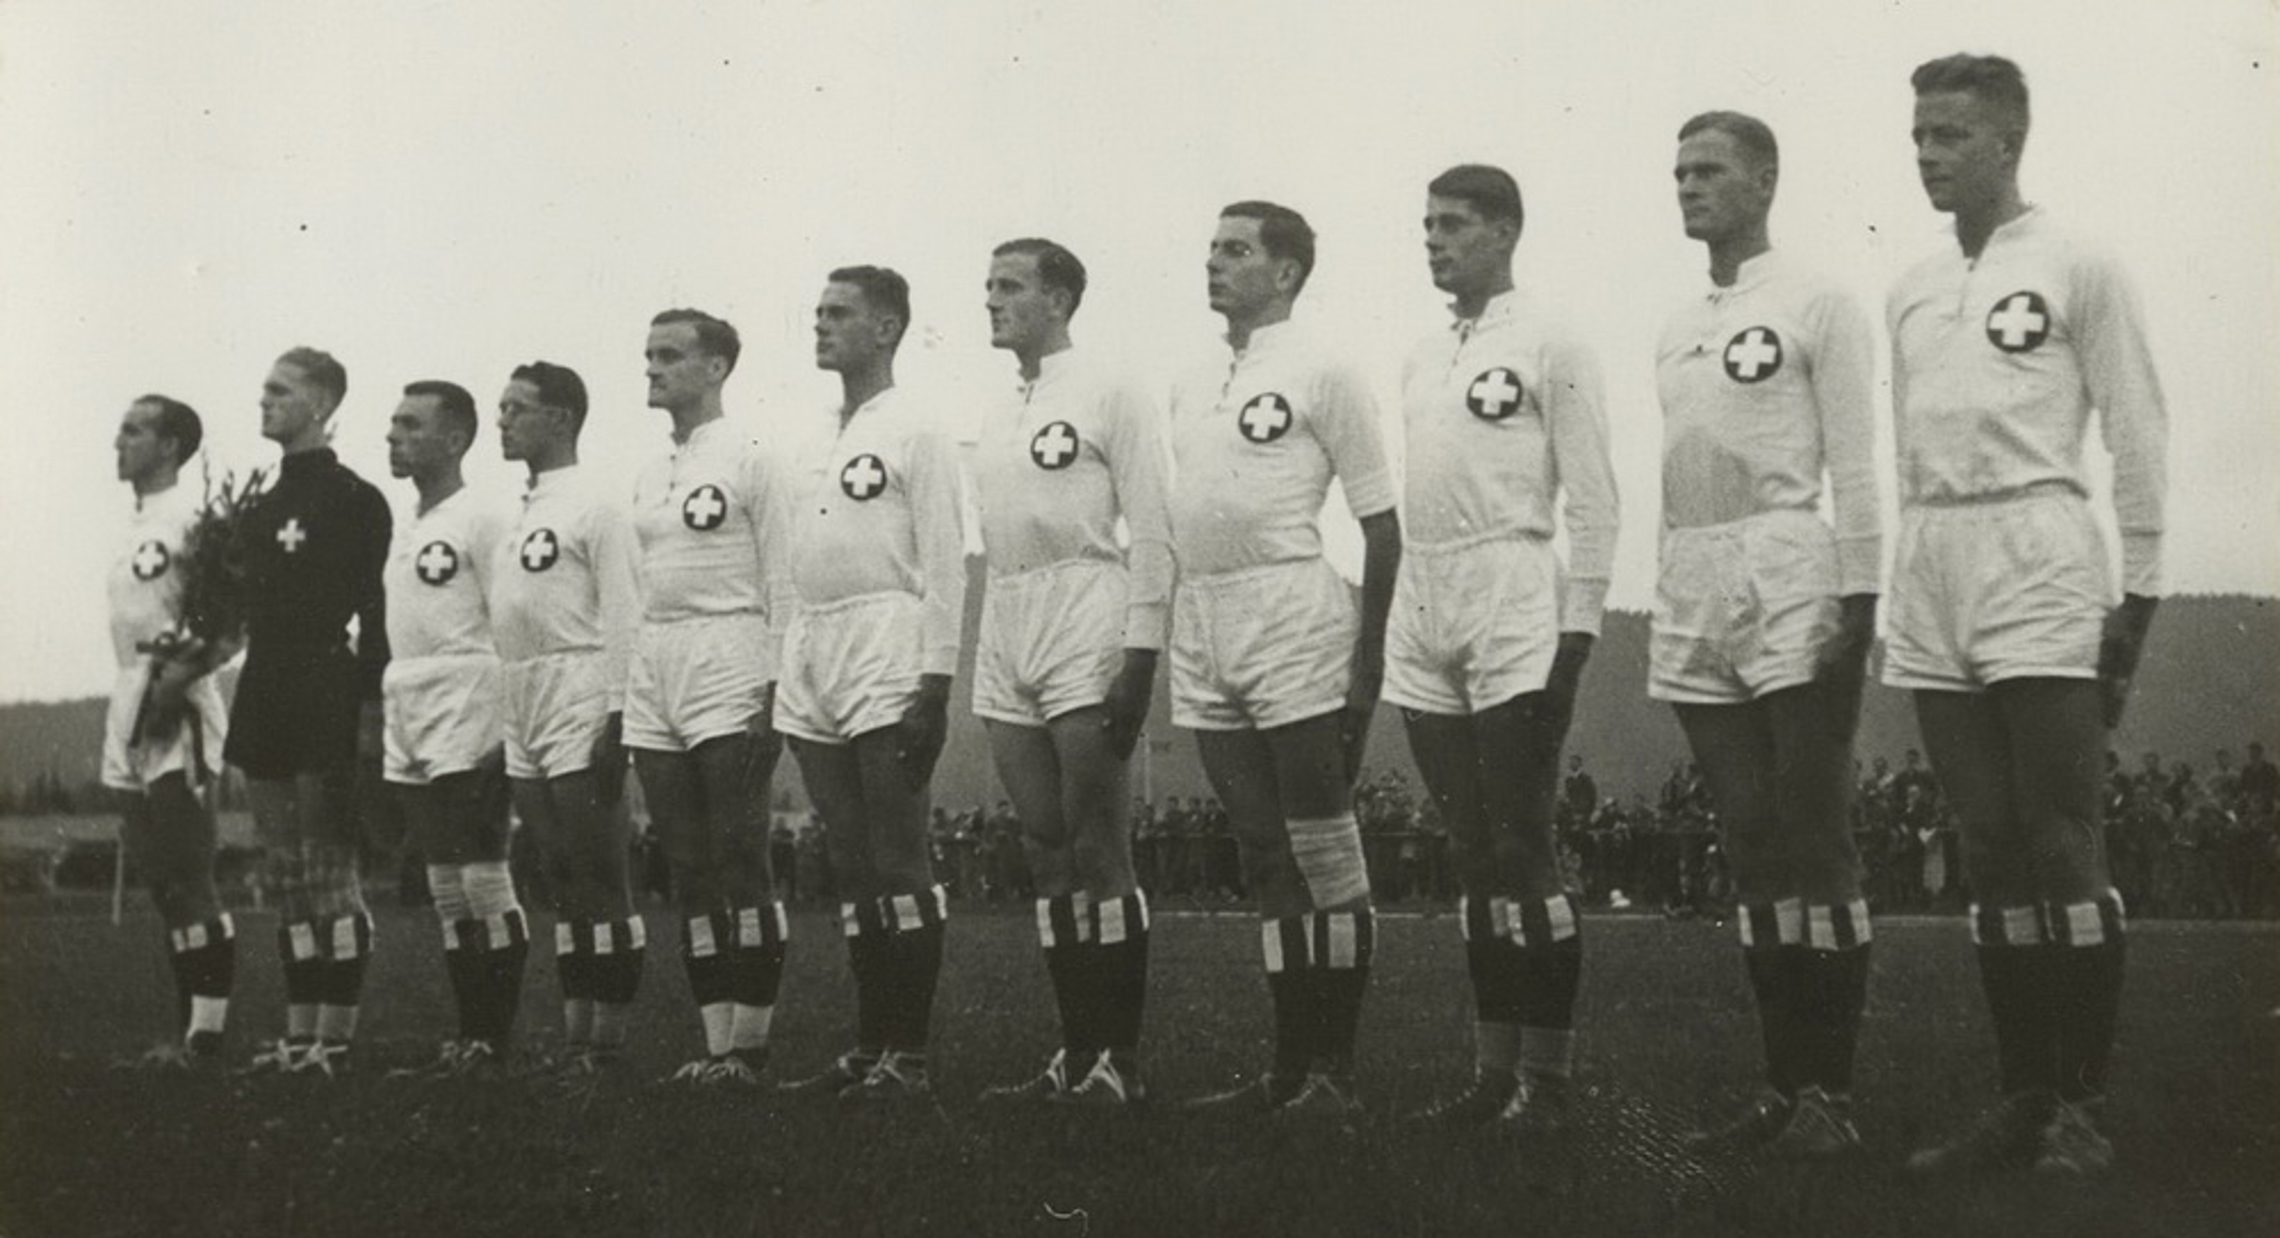 1937-08-22 Schweiz - Holland 19:3 (9:1), Winterthur, Zuschauer 4000